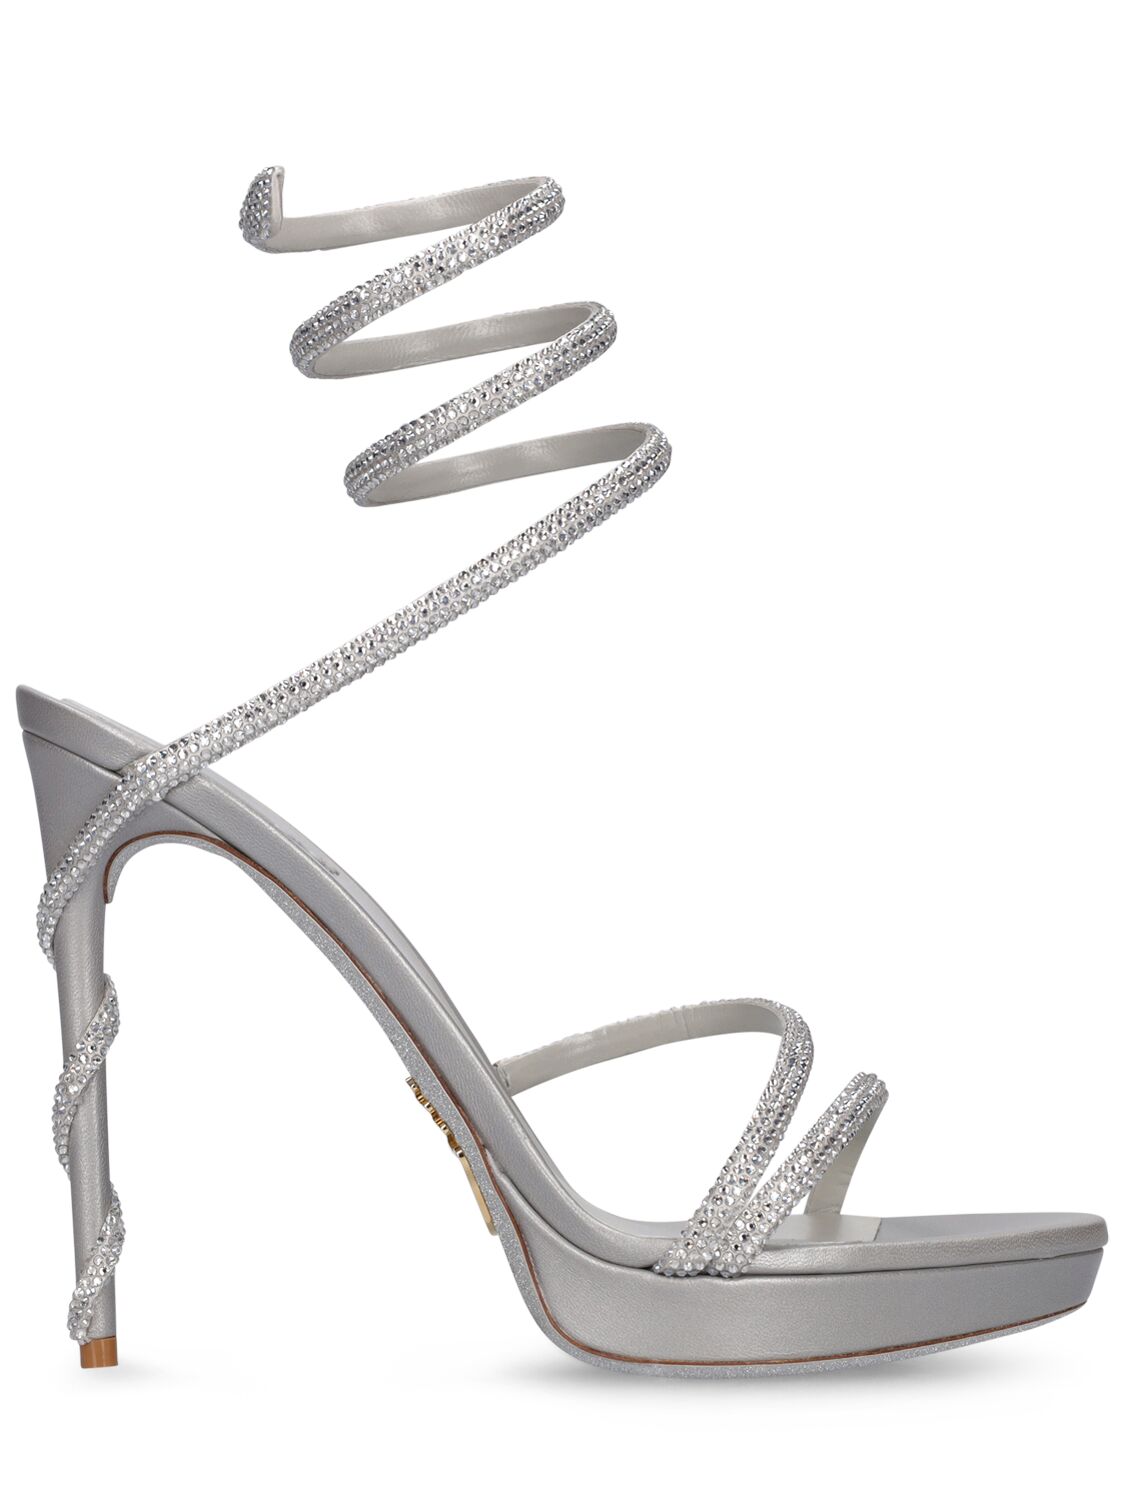 René Caovilla 120mm Margot Satin & Crystals Sandals In Silver